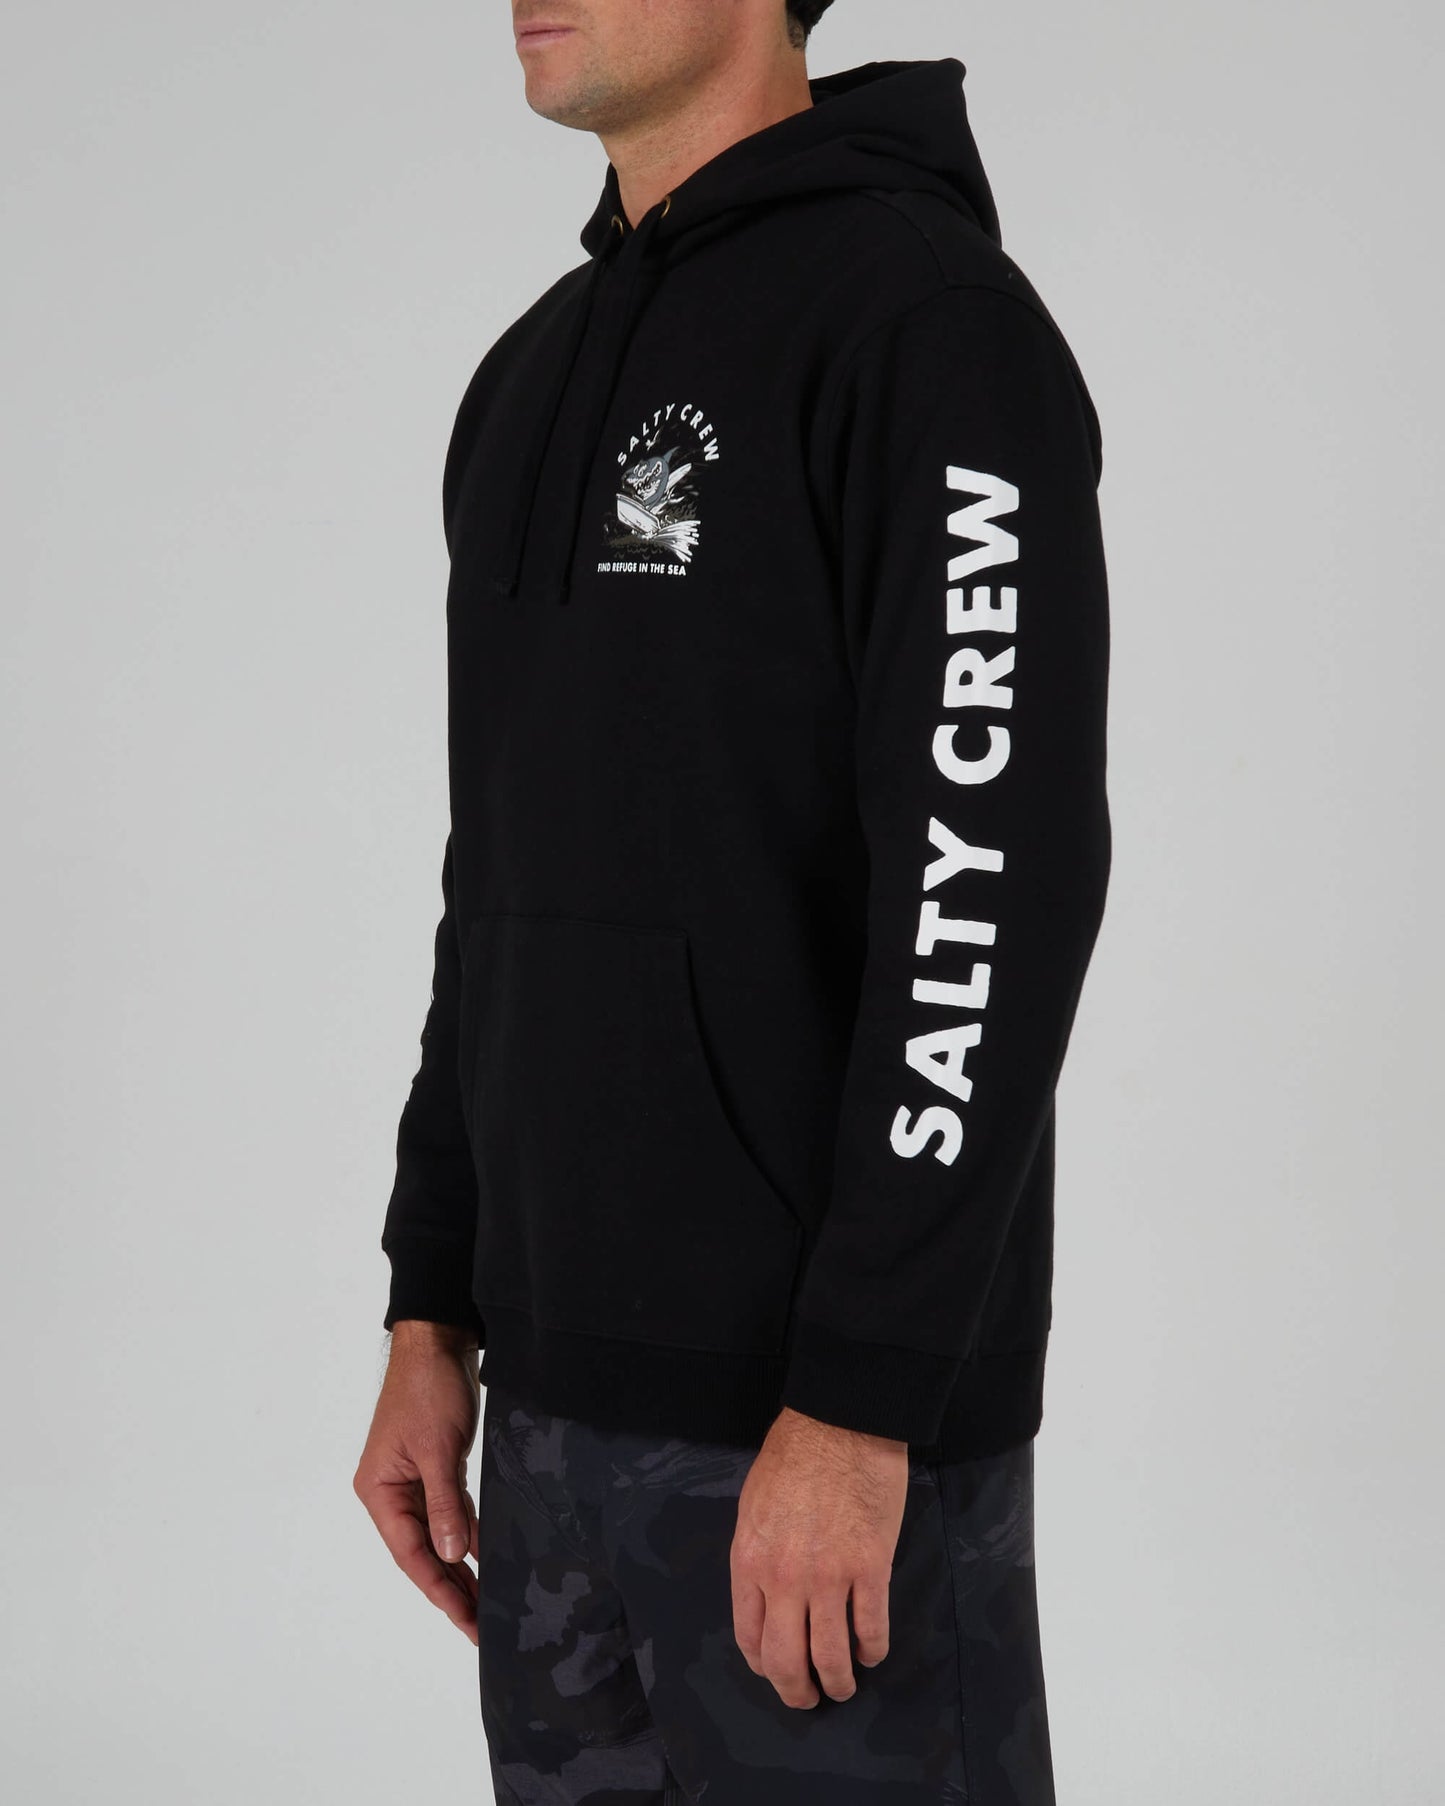 Salty Crew Männer - Hot Rod Haifischhaube Fleece - Black